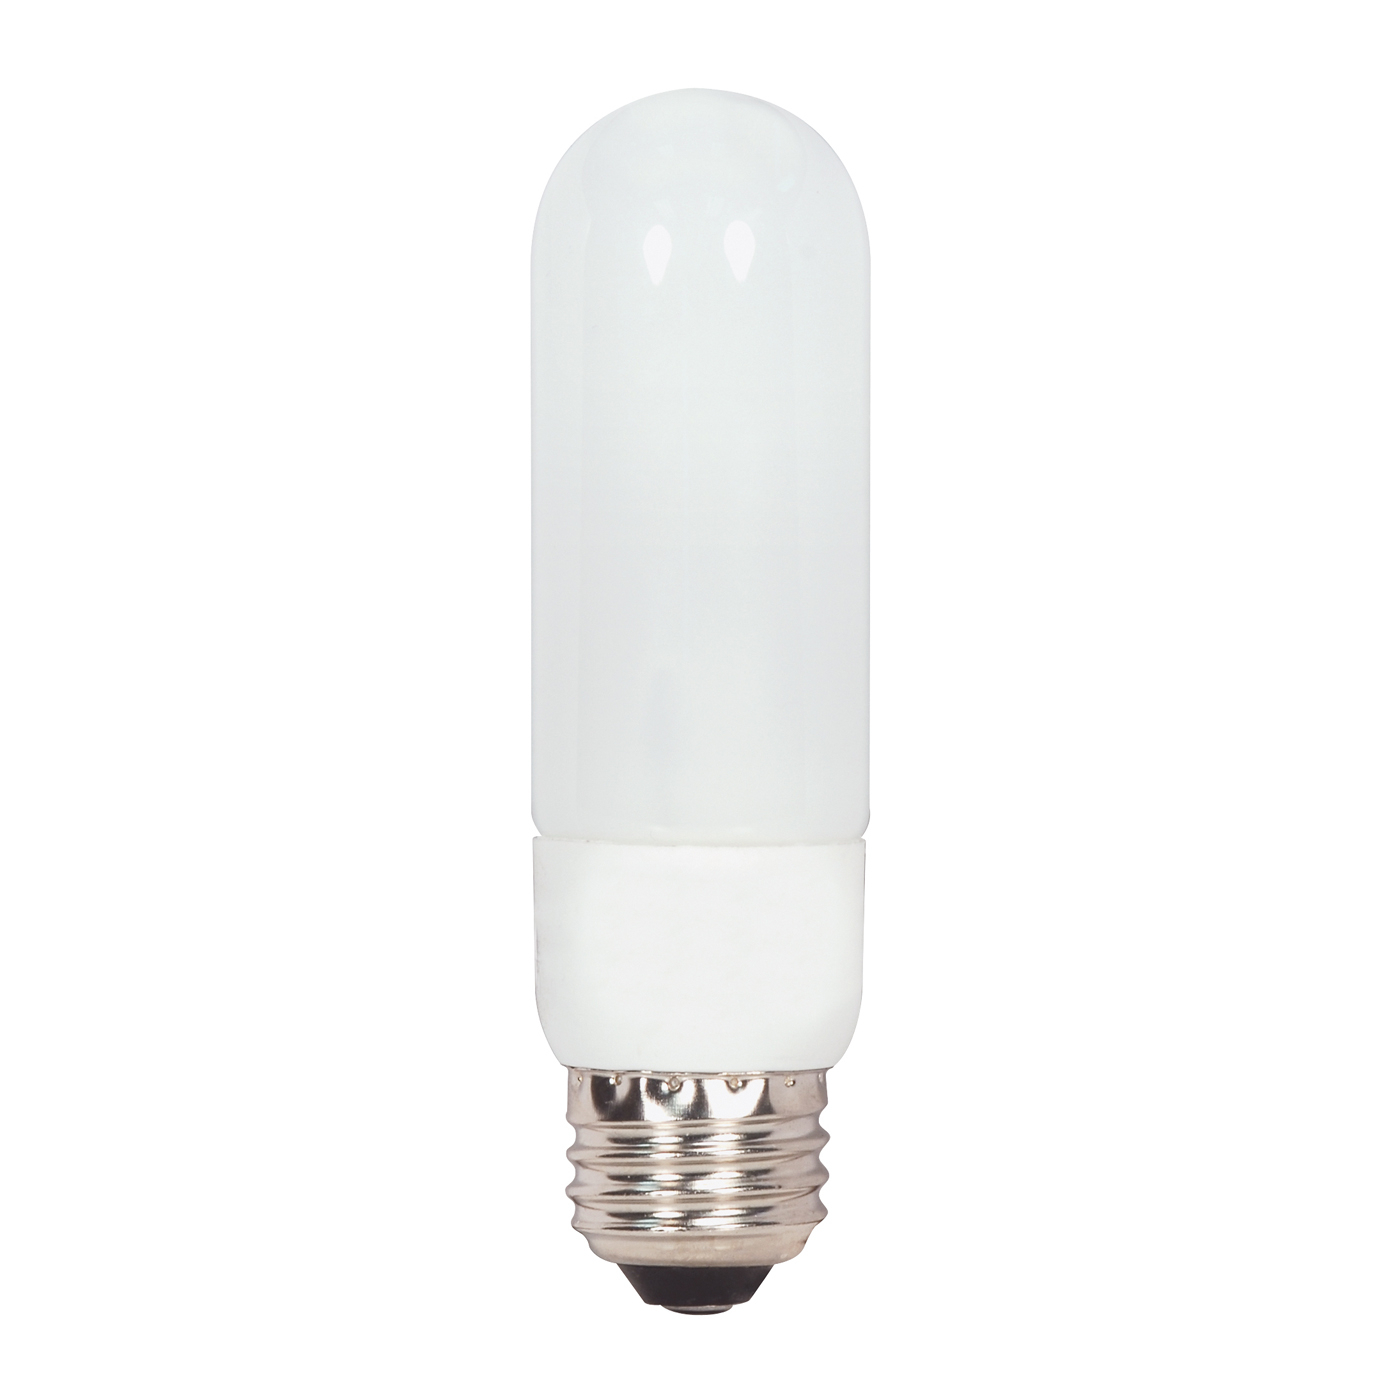 Led Light Bulb Type T Light Bulb Ideas within size 1400 X 1400